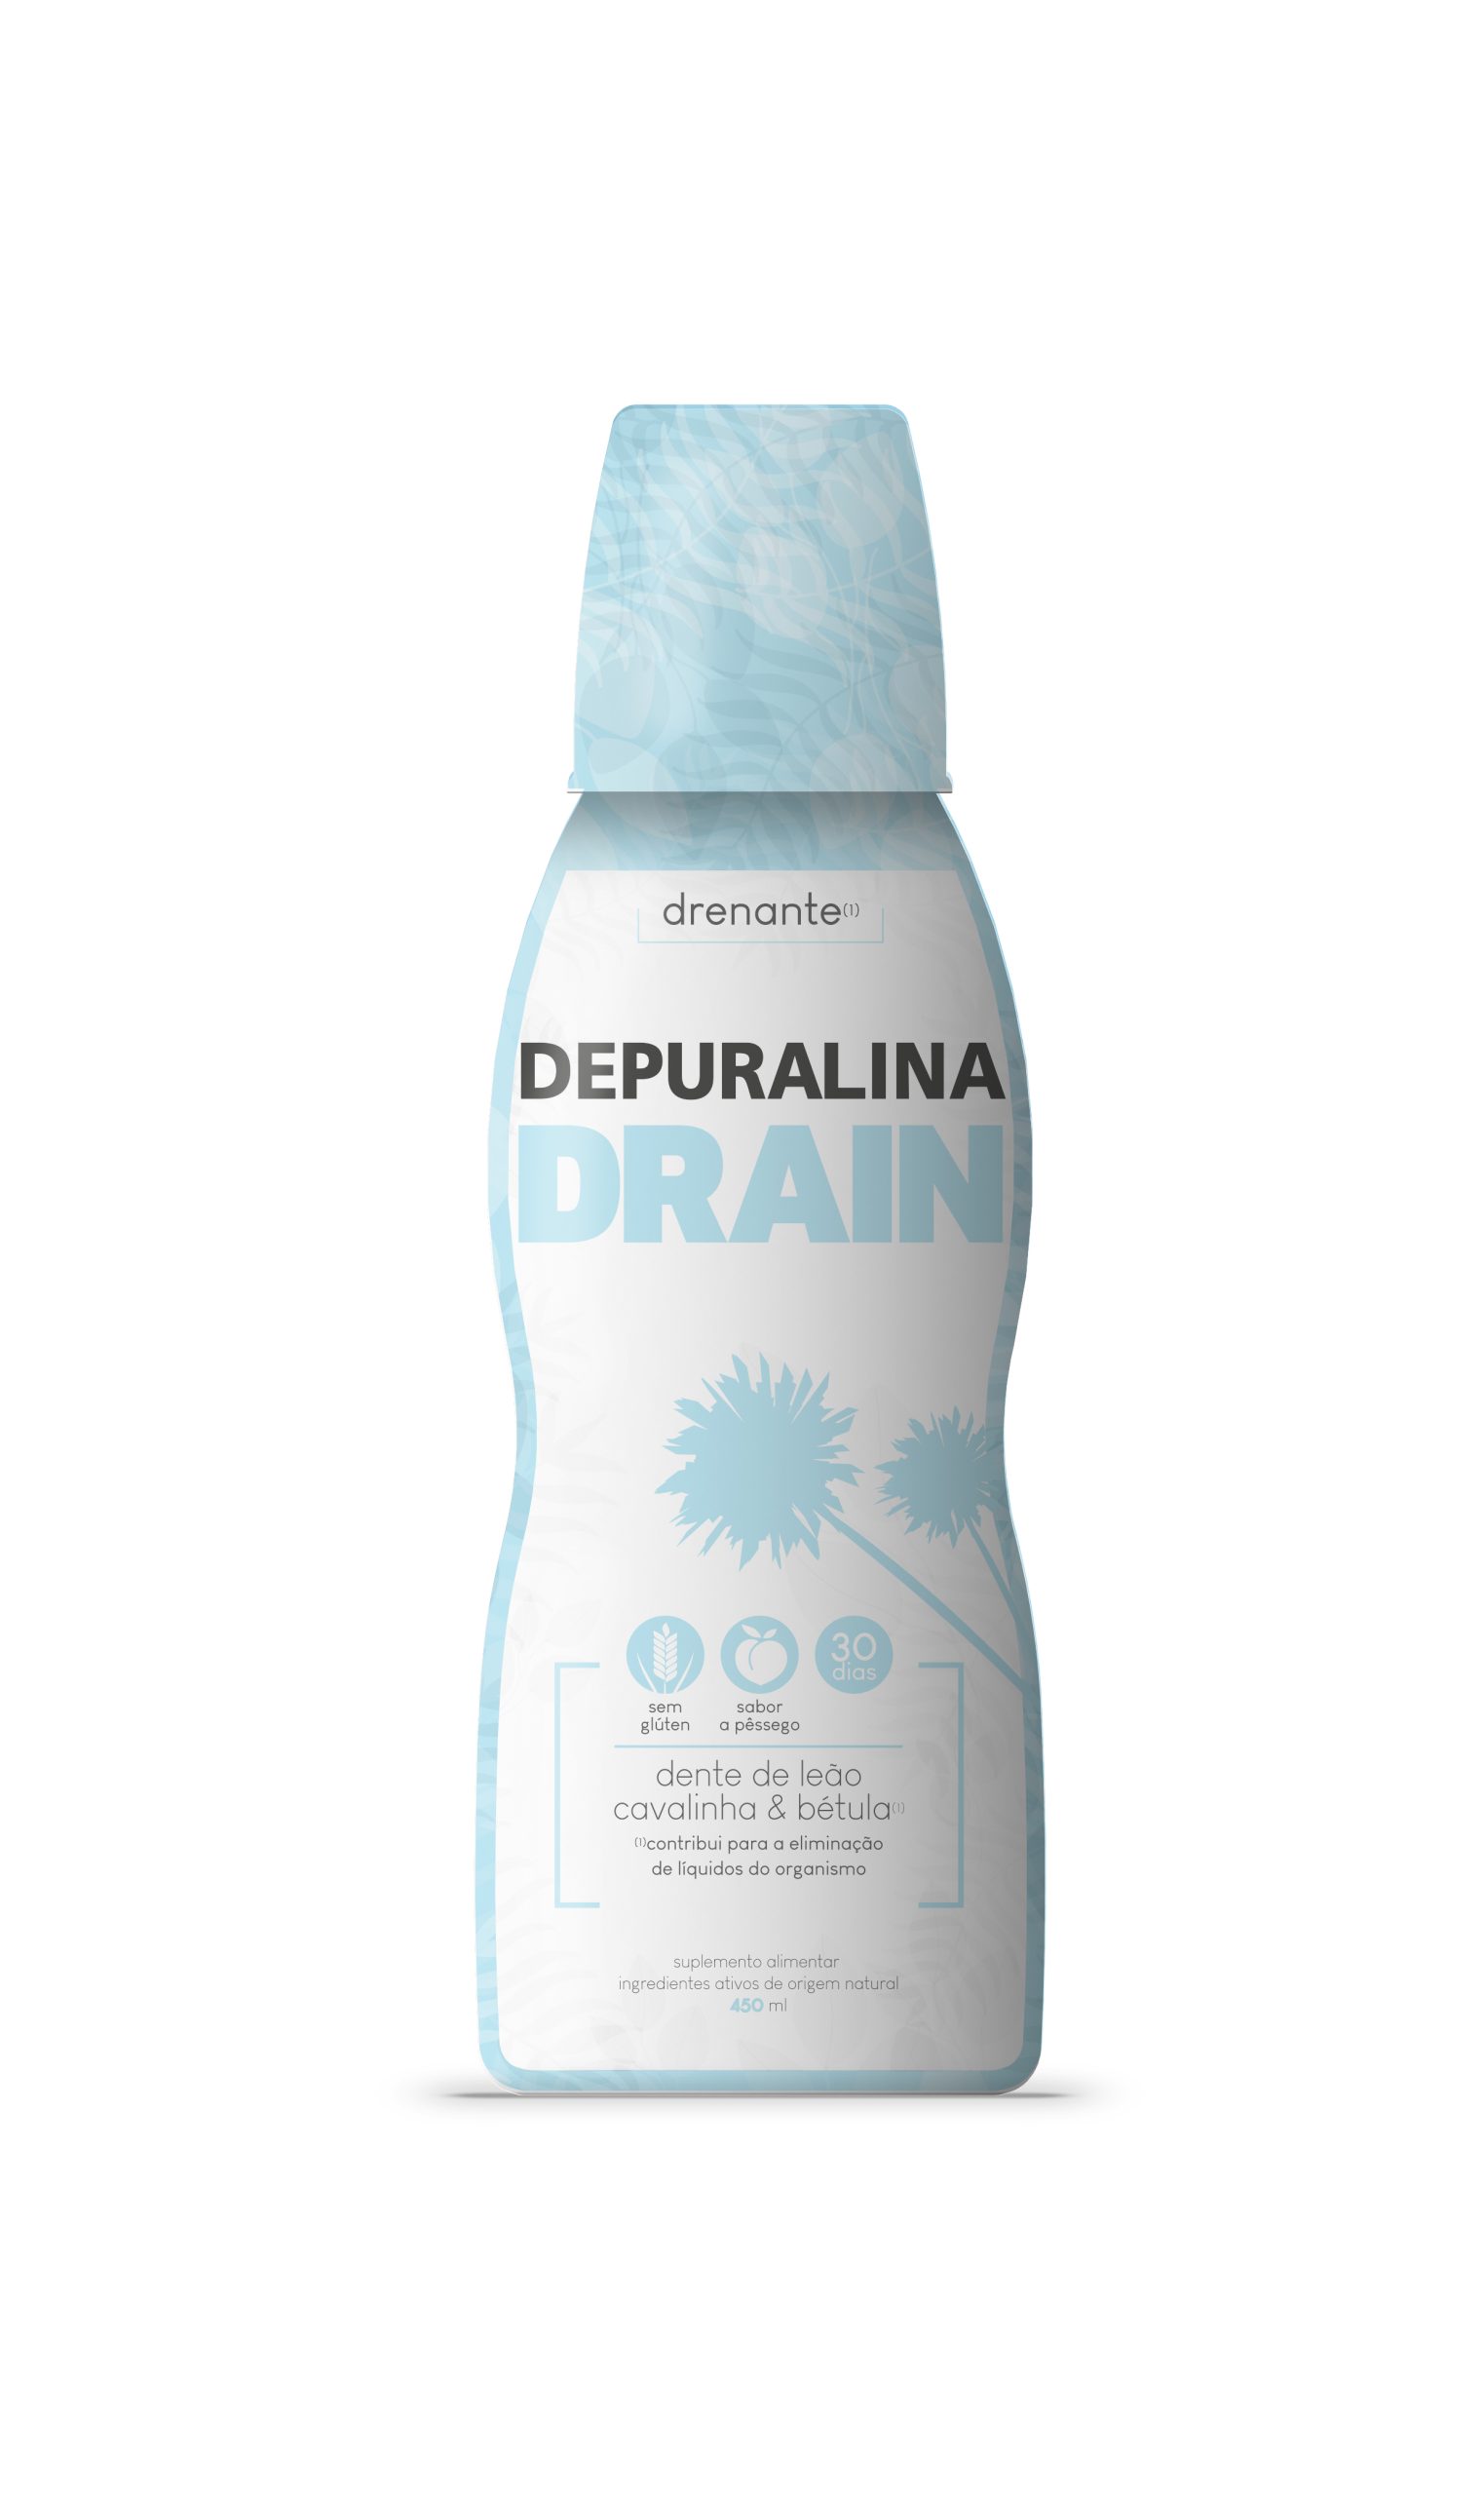 depuralina-drain-450-ml-scaled-1.jpg